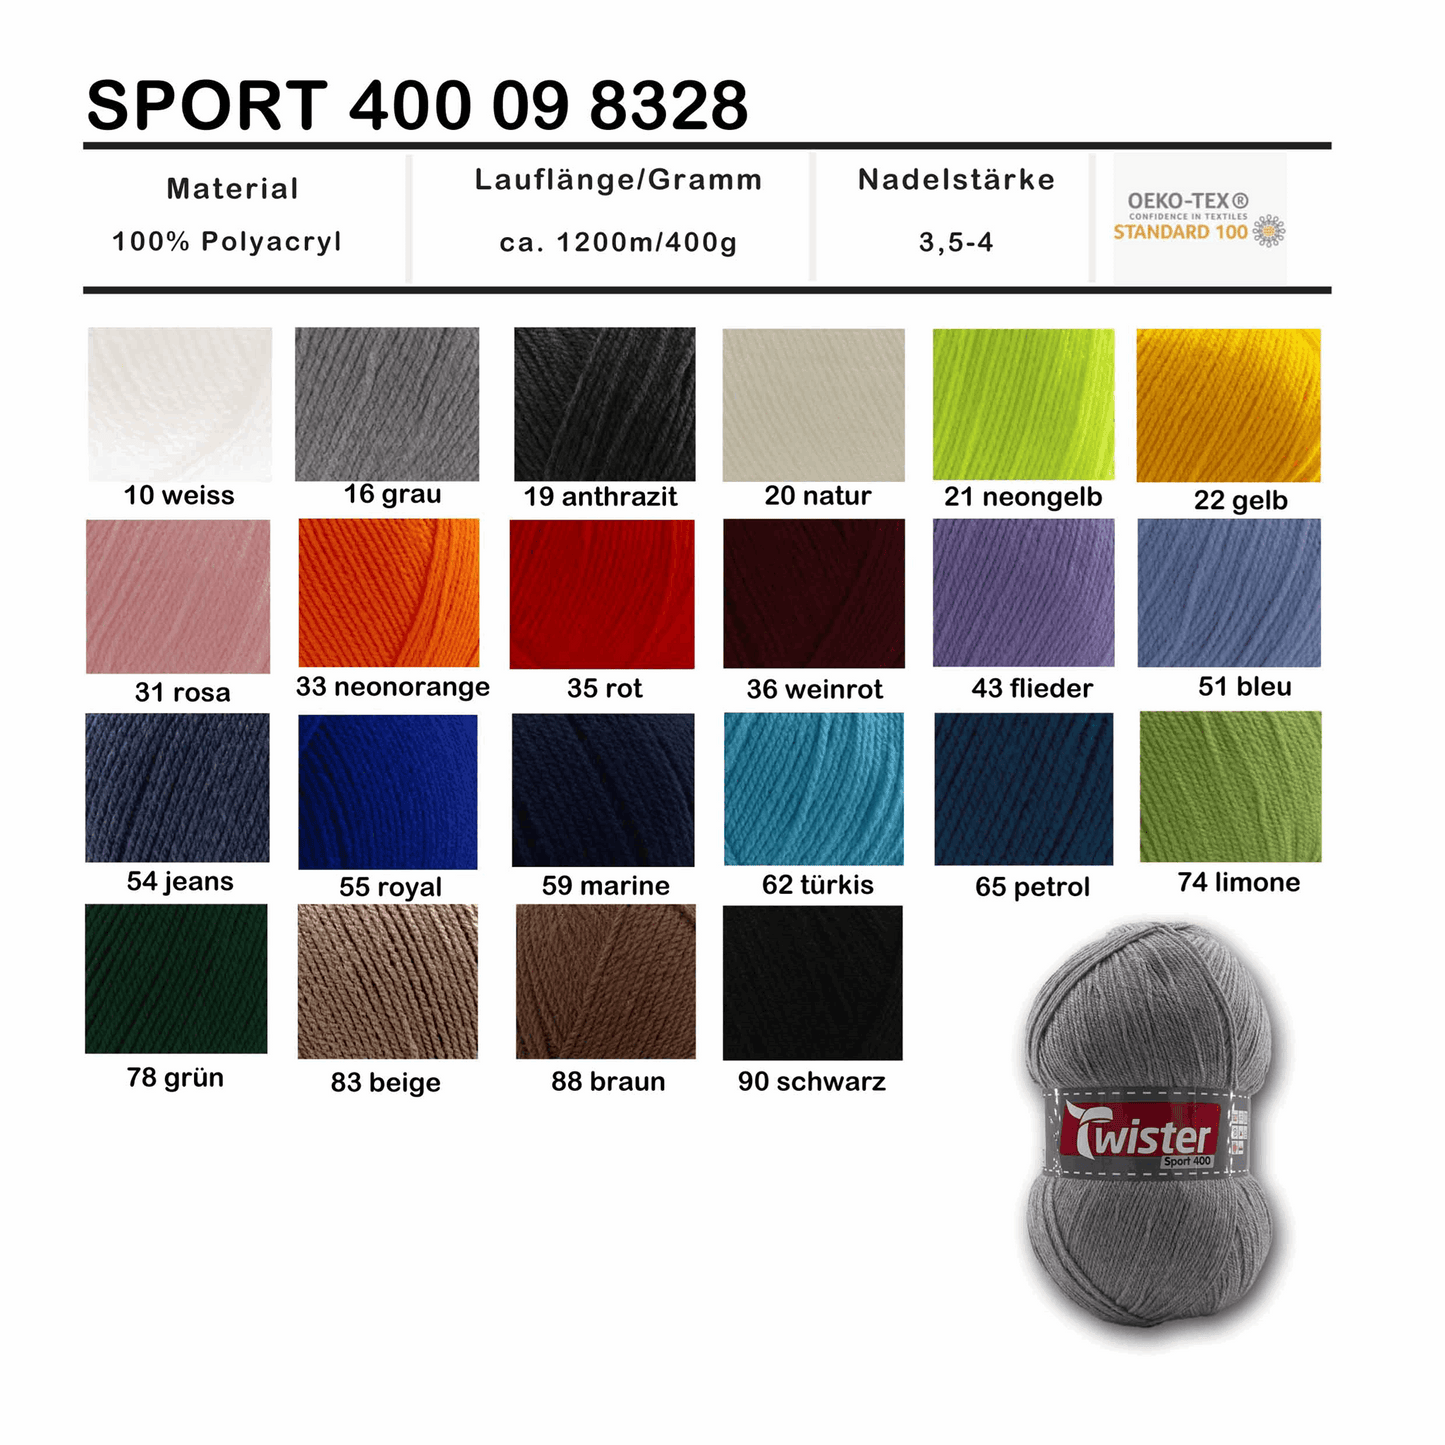 Twister Sport 400, 98328, Farbe schwarz 90